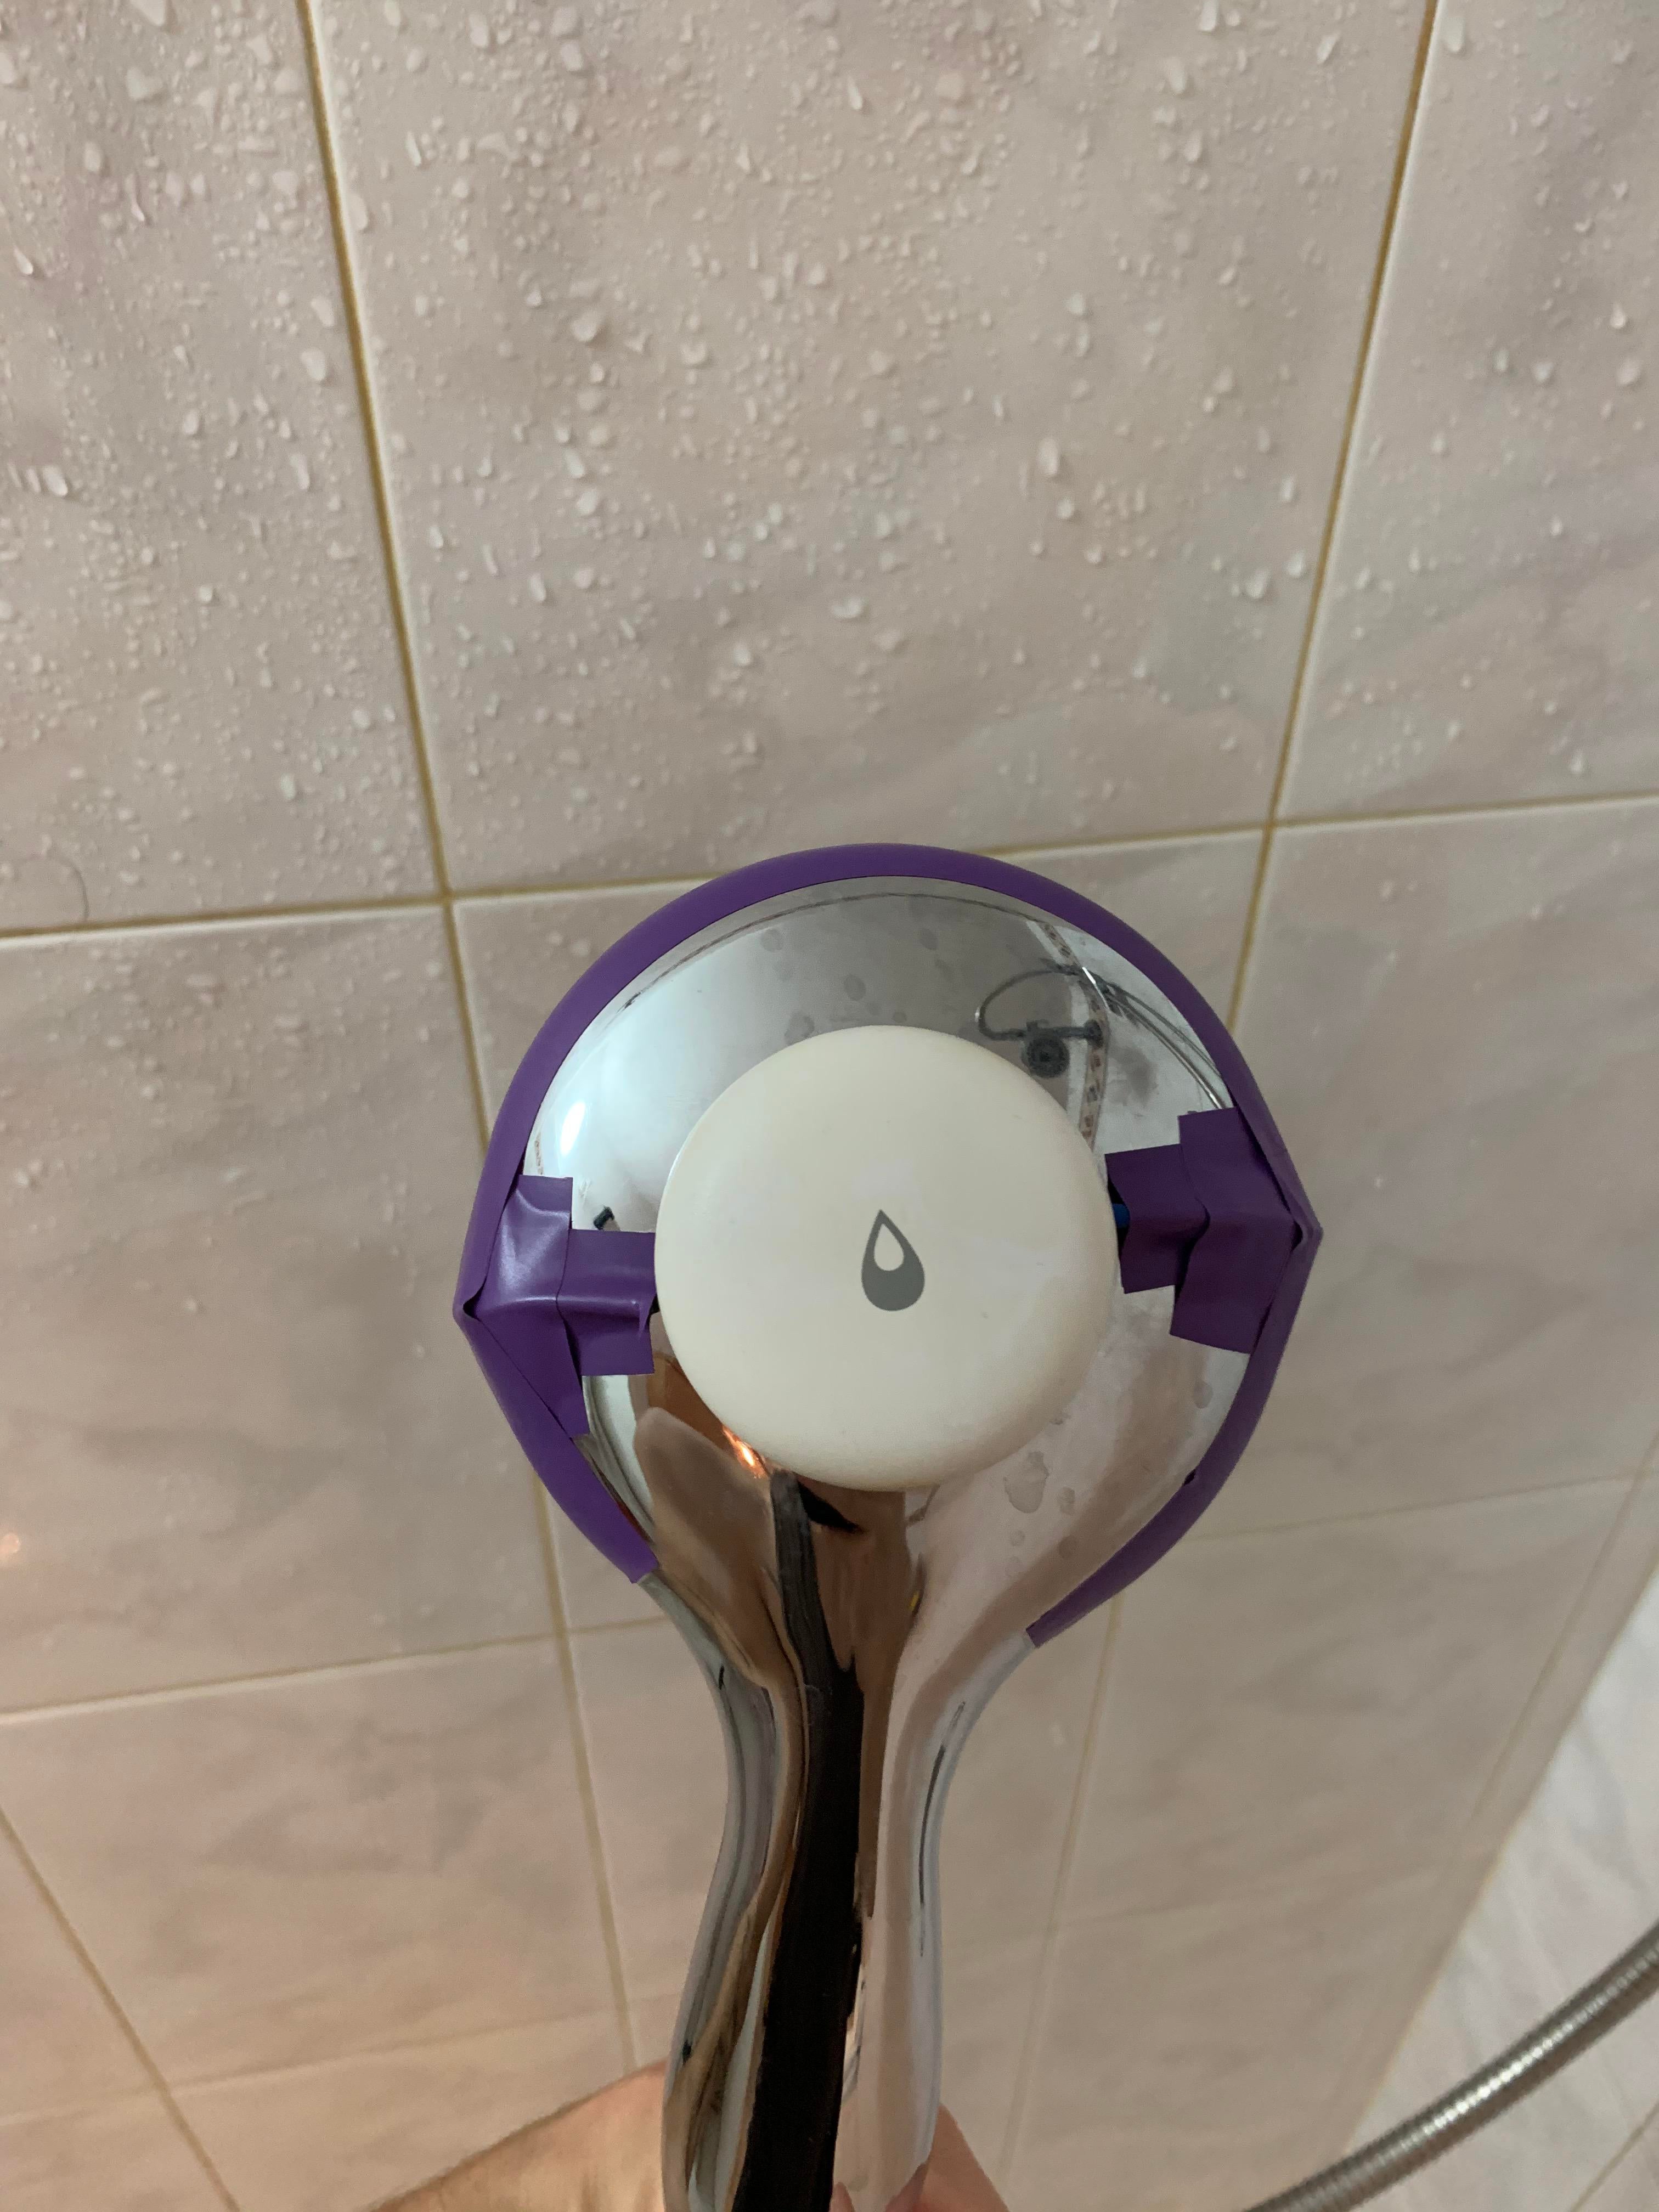 Made my shower head smart with Aqara leak detector